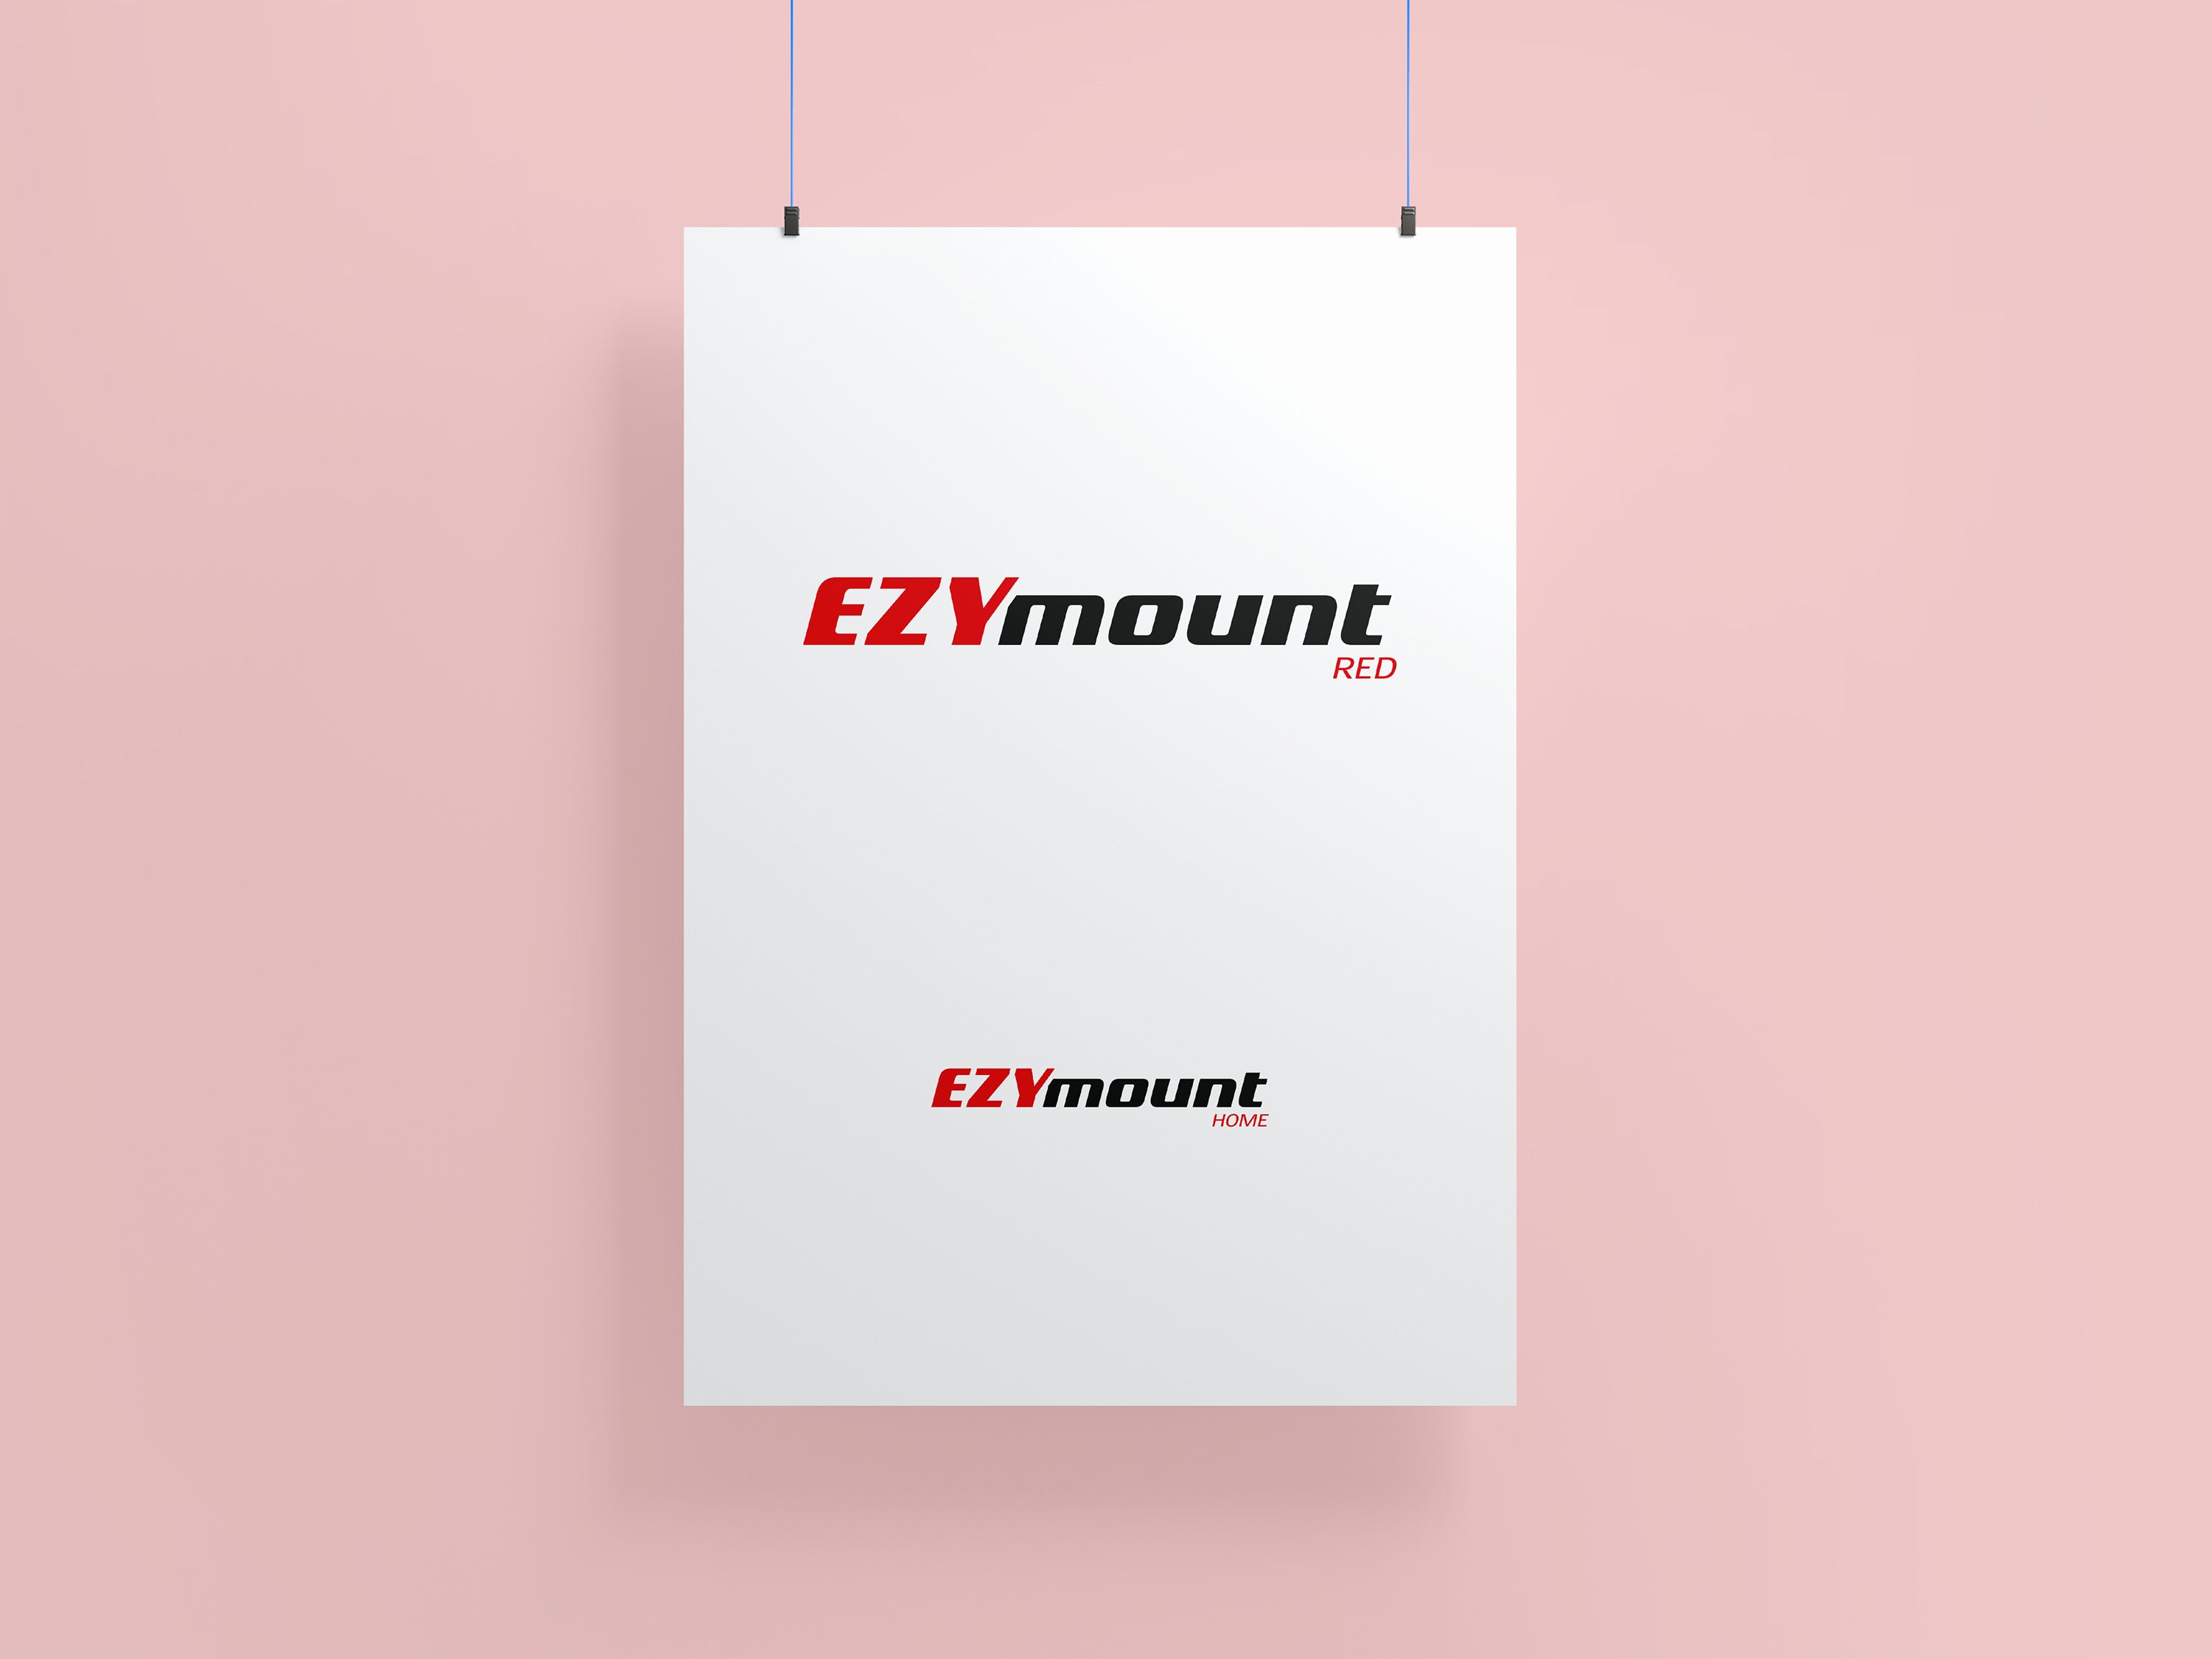 Ezymount colour logo version